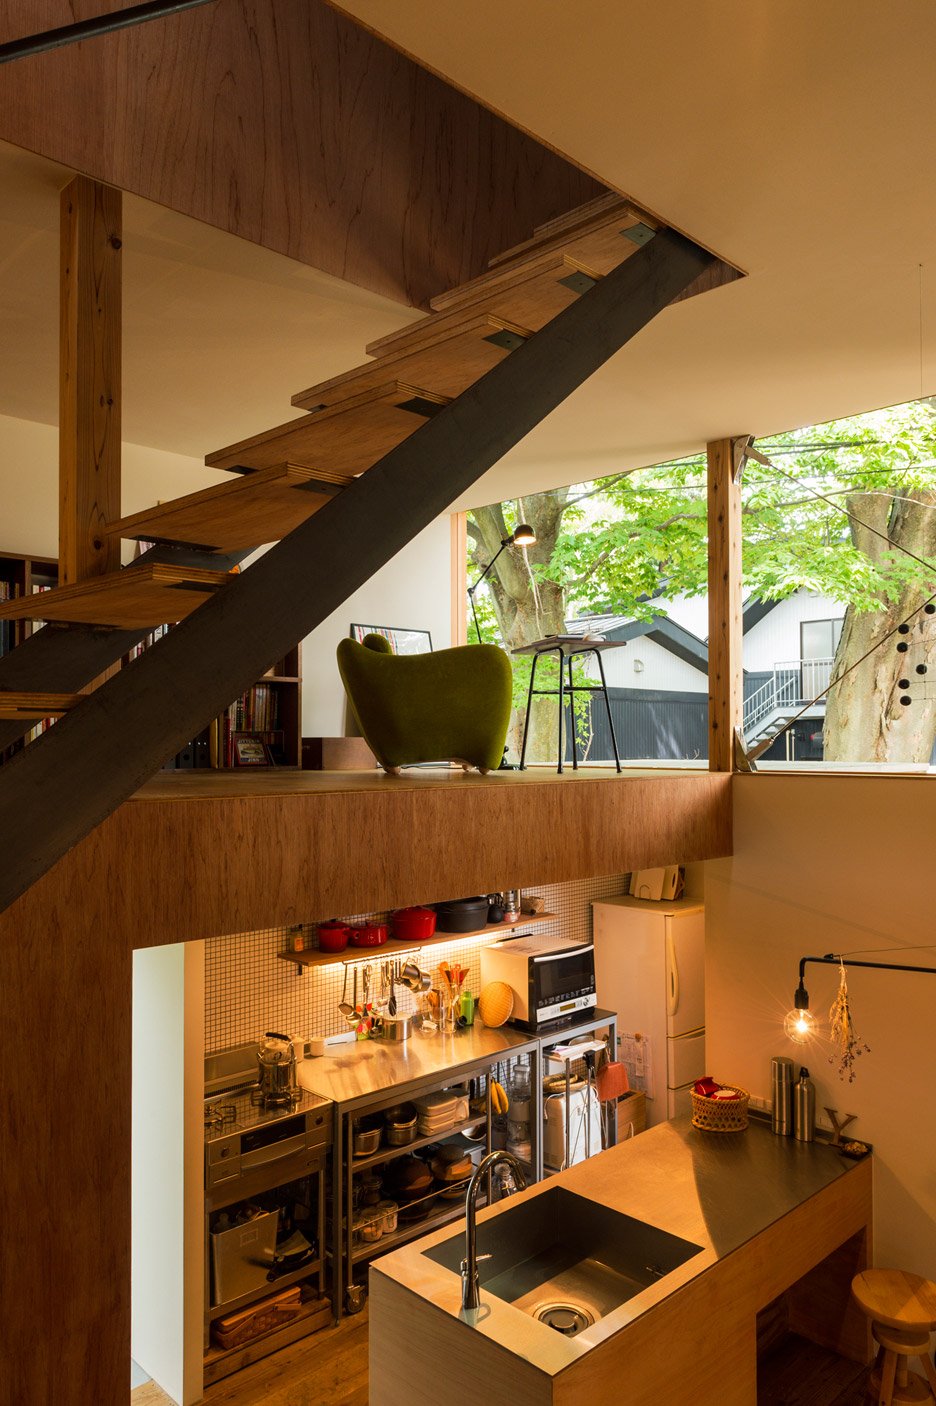 House to catch the tree by Takeru Shoji Architects